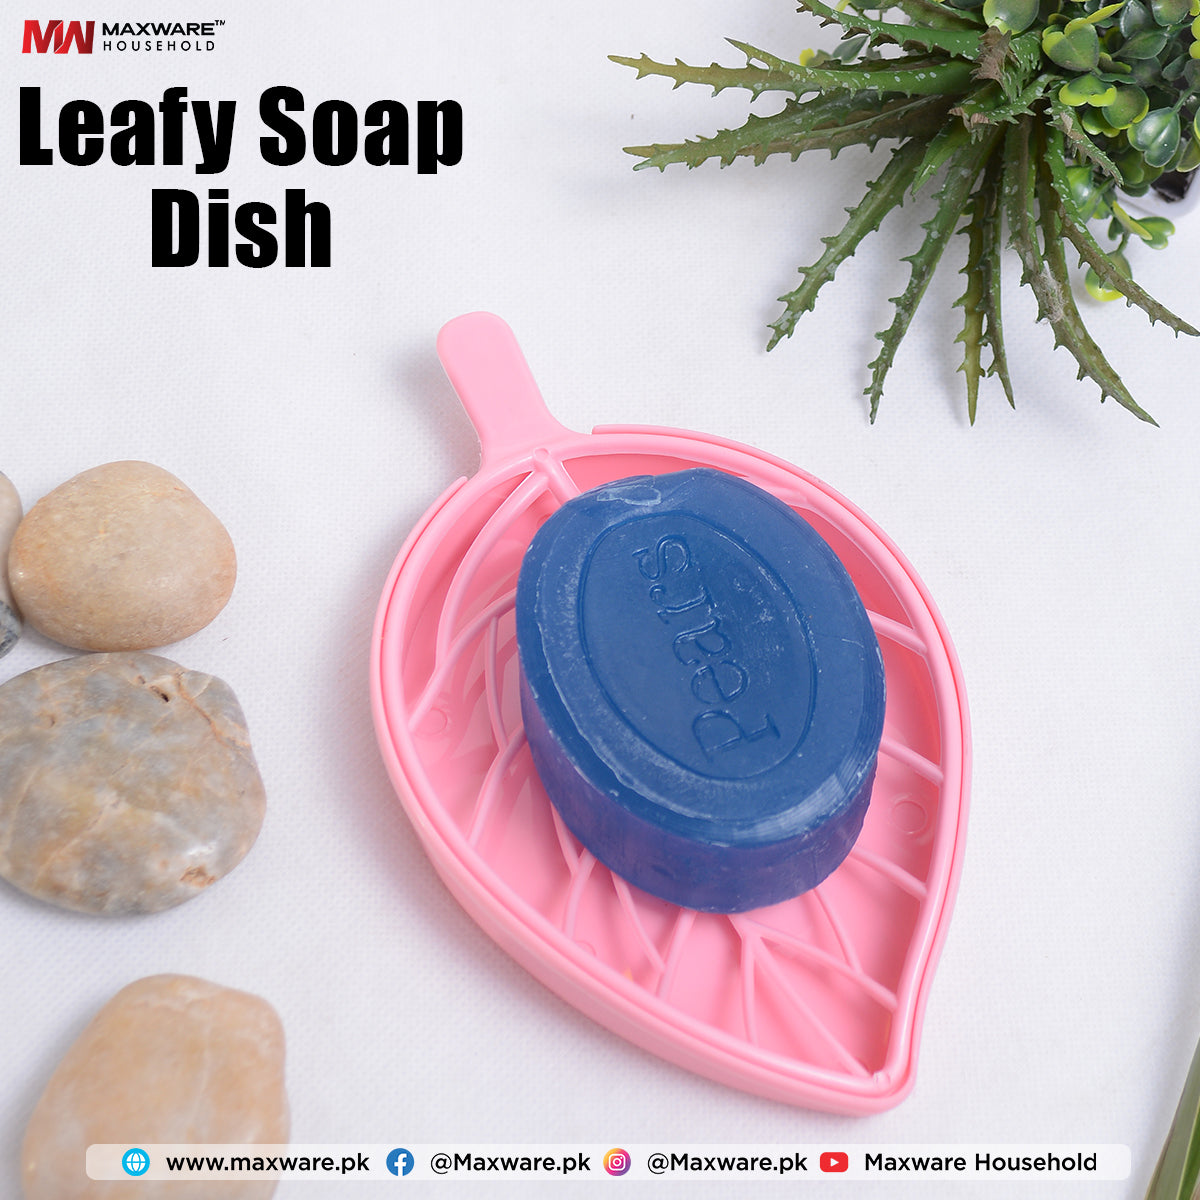 Leafy Soap Dish - Maxwaremart